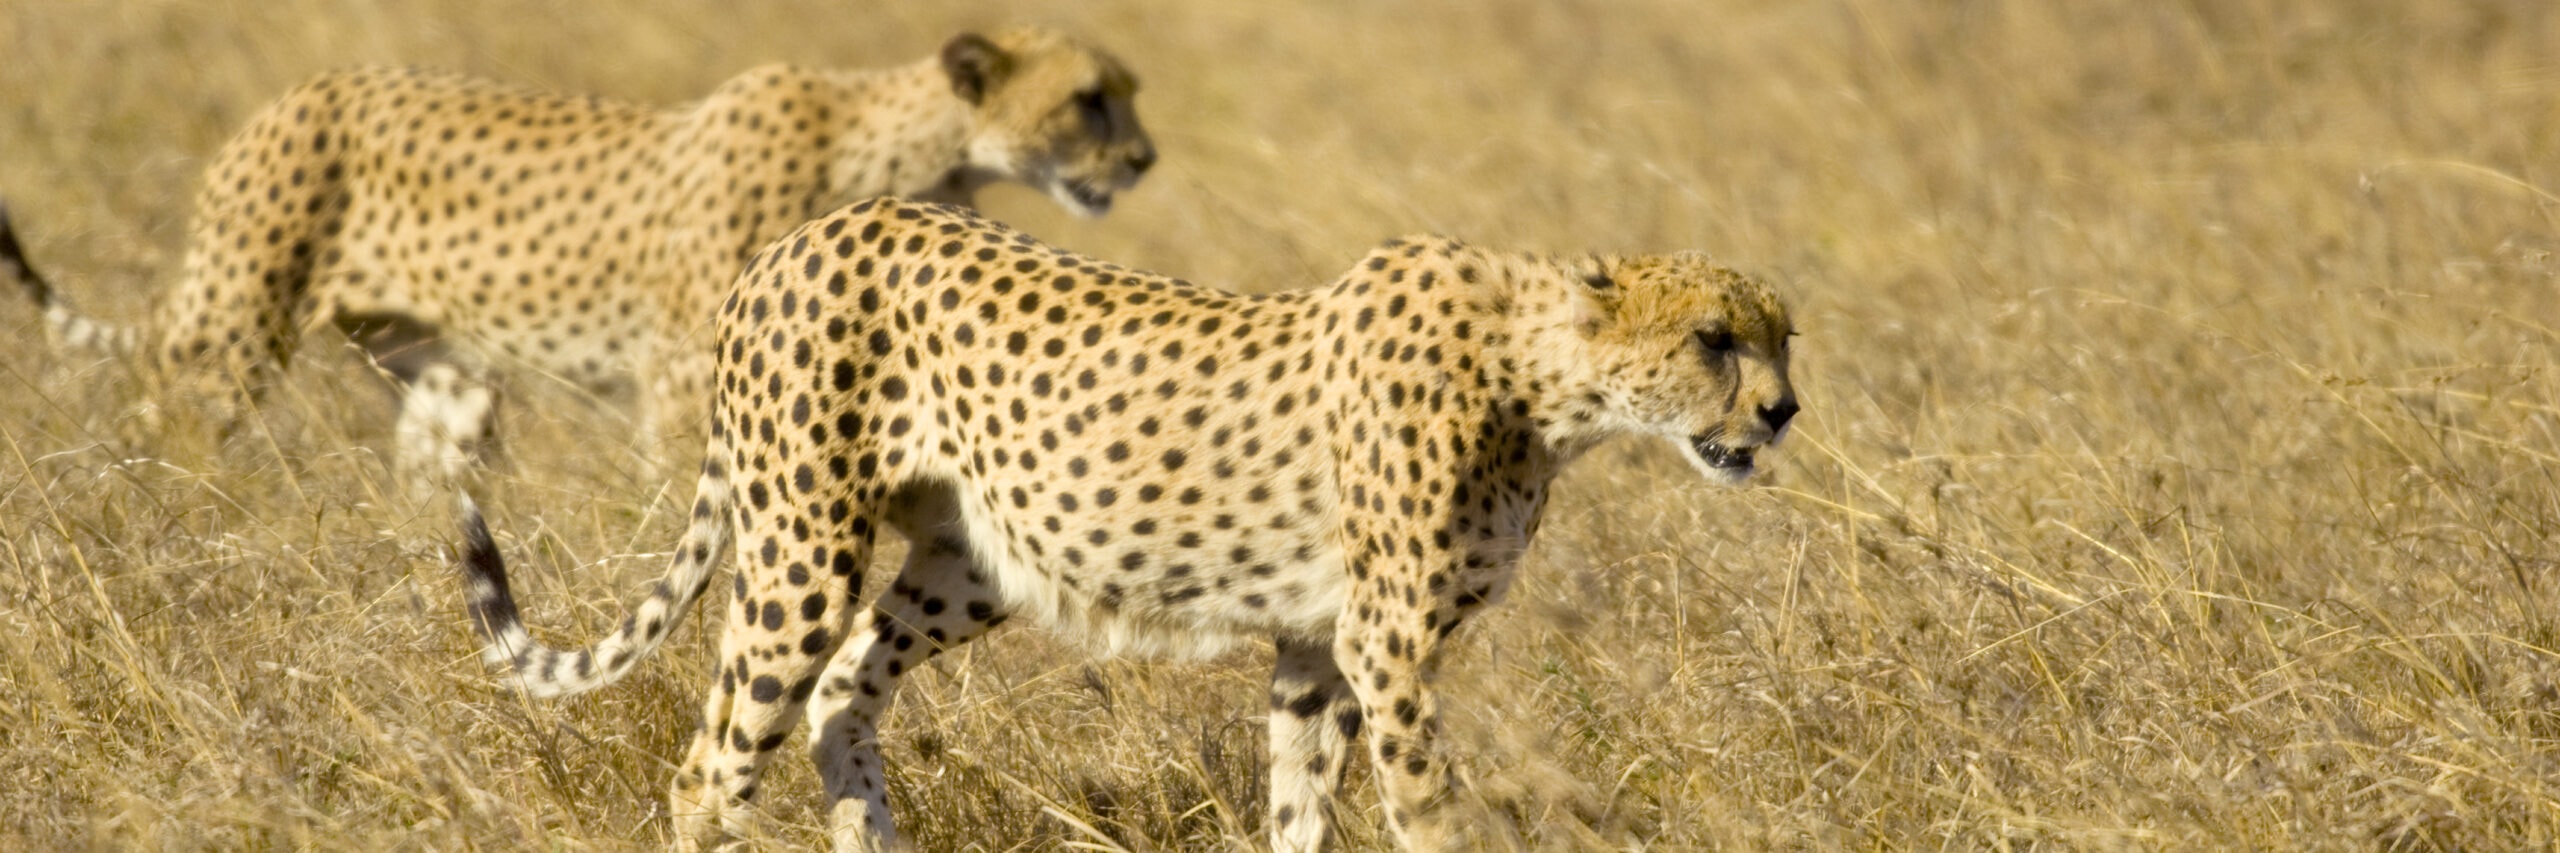 cheetah masai mara kenya 2021 08 26 18 00 22 utc 1 scaled